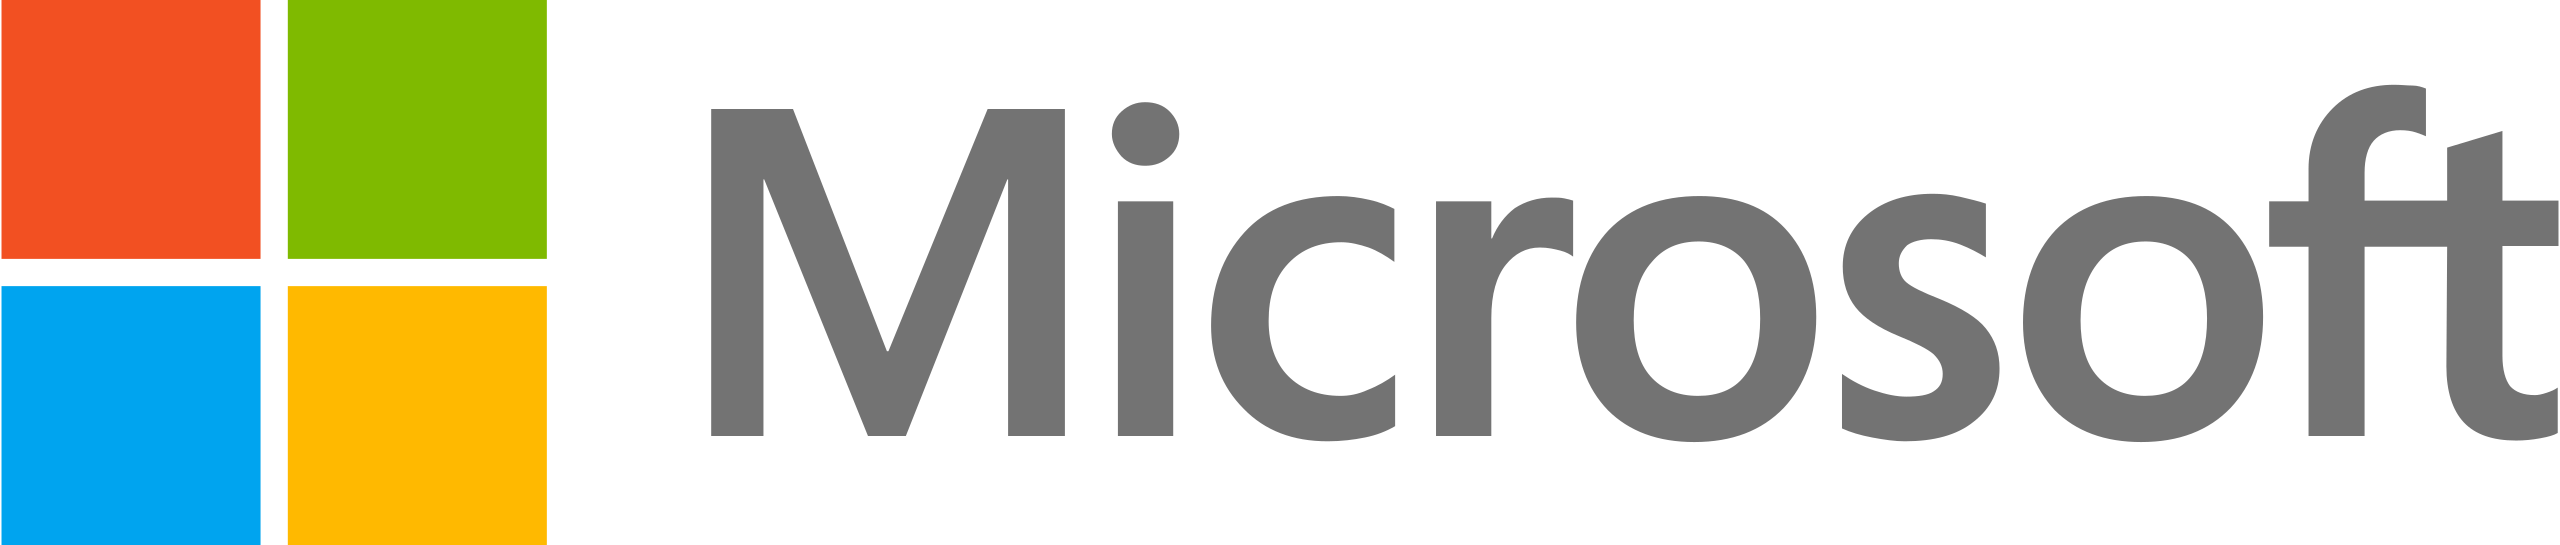 Microsoft_logo_(2012)